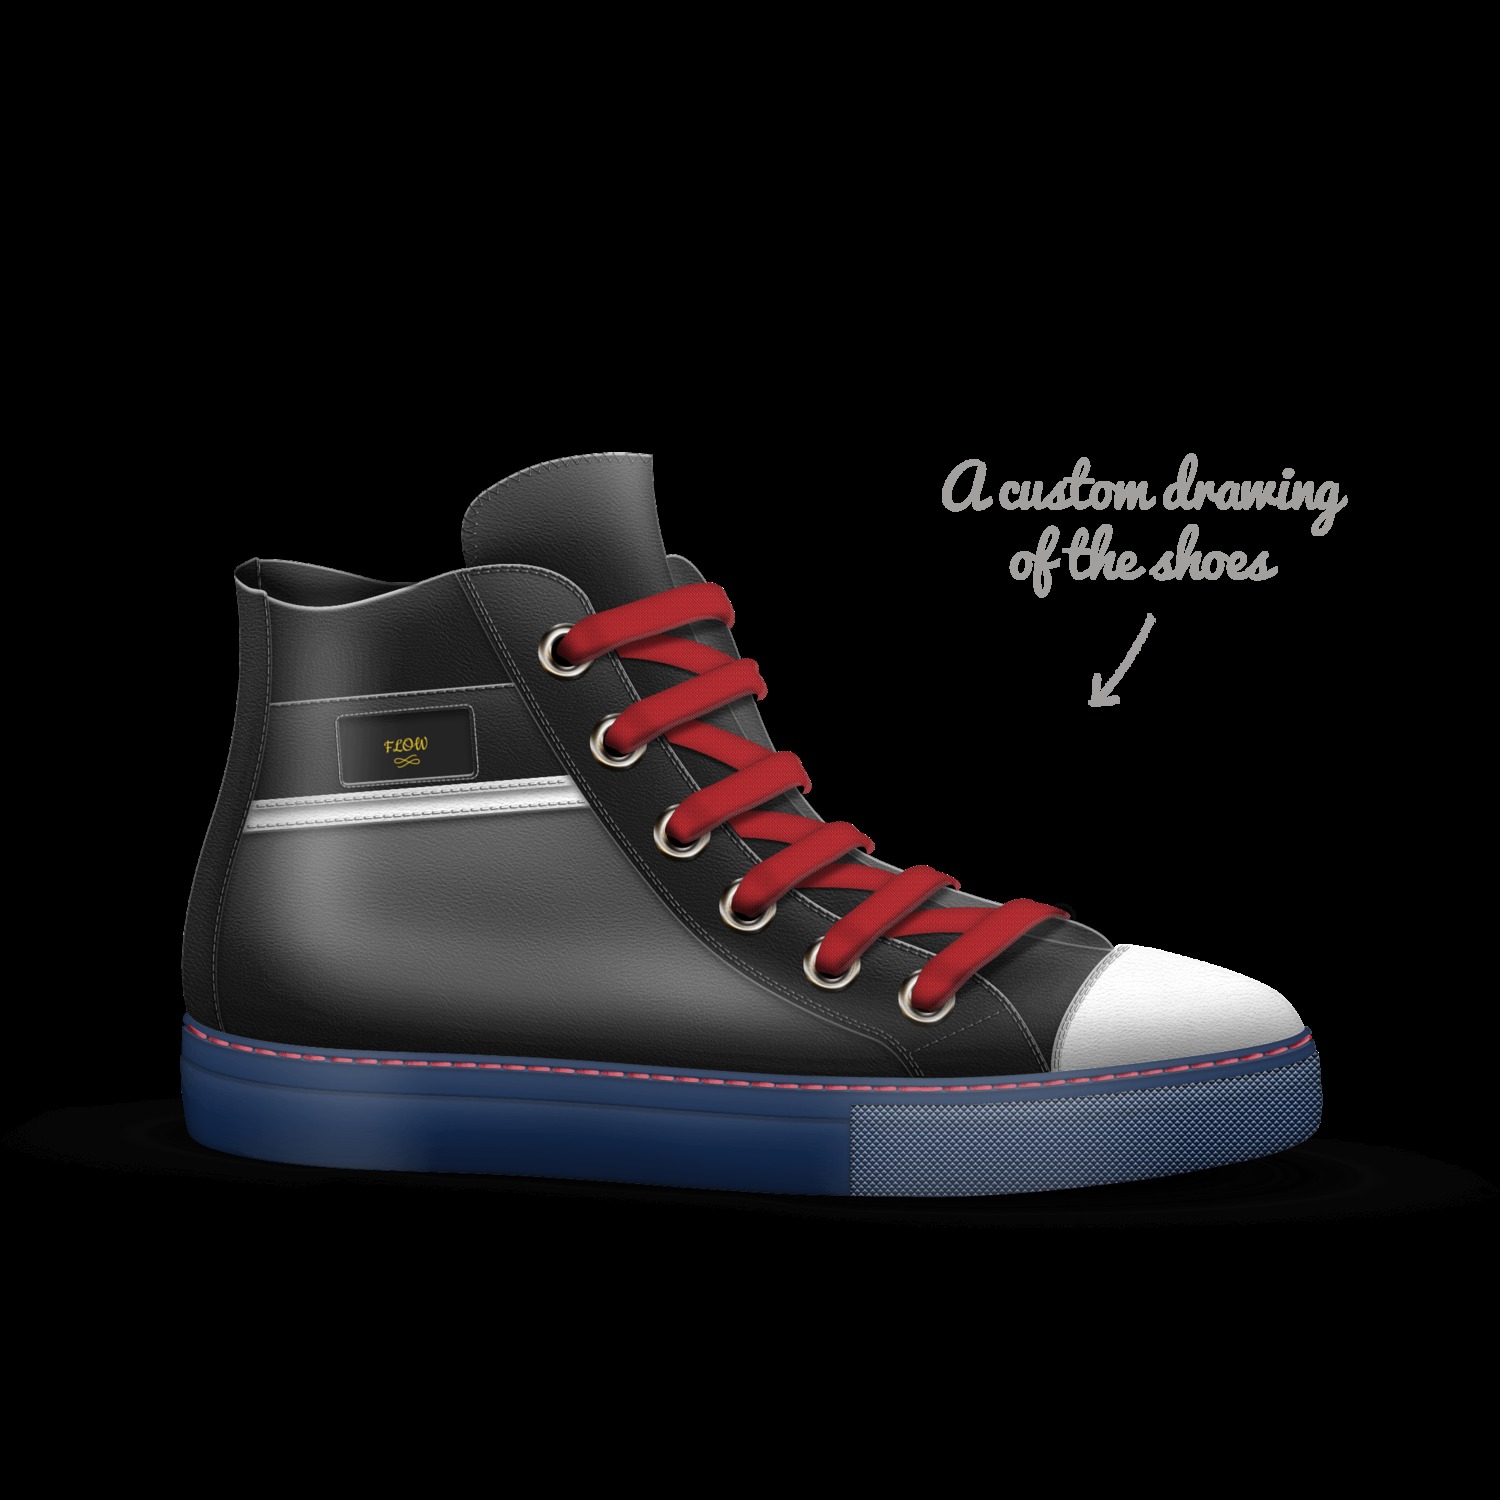 FLOW | A Custom Shoe concept by Tom Smith